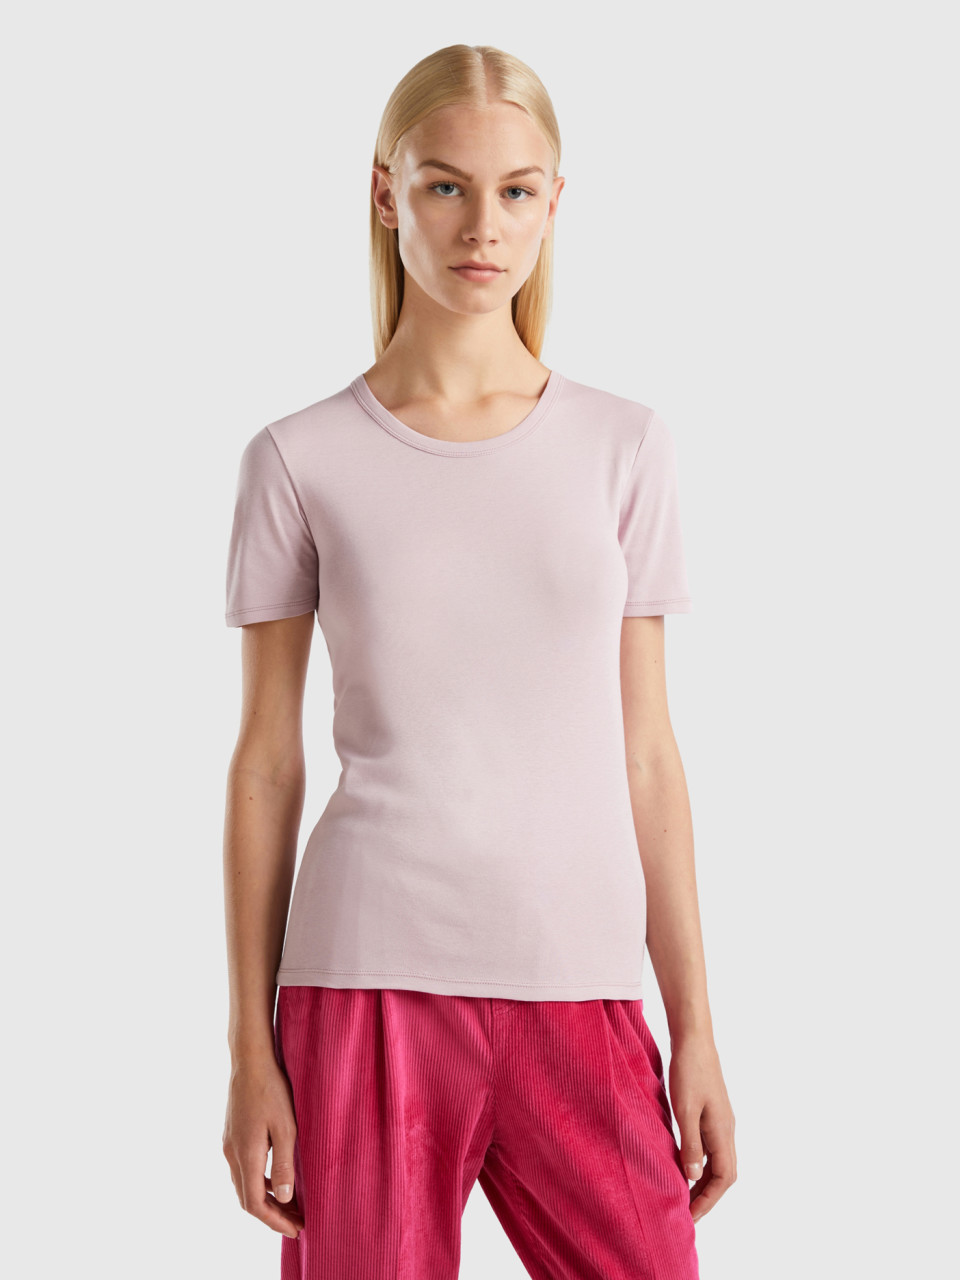 Benetton, Long Fiber Cotton T-shirt, Lilac, Women